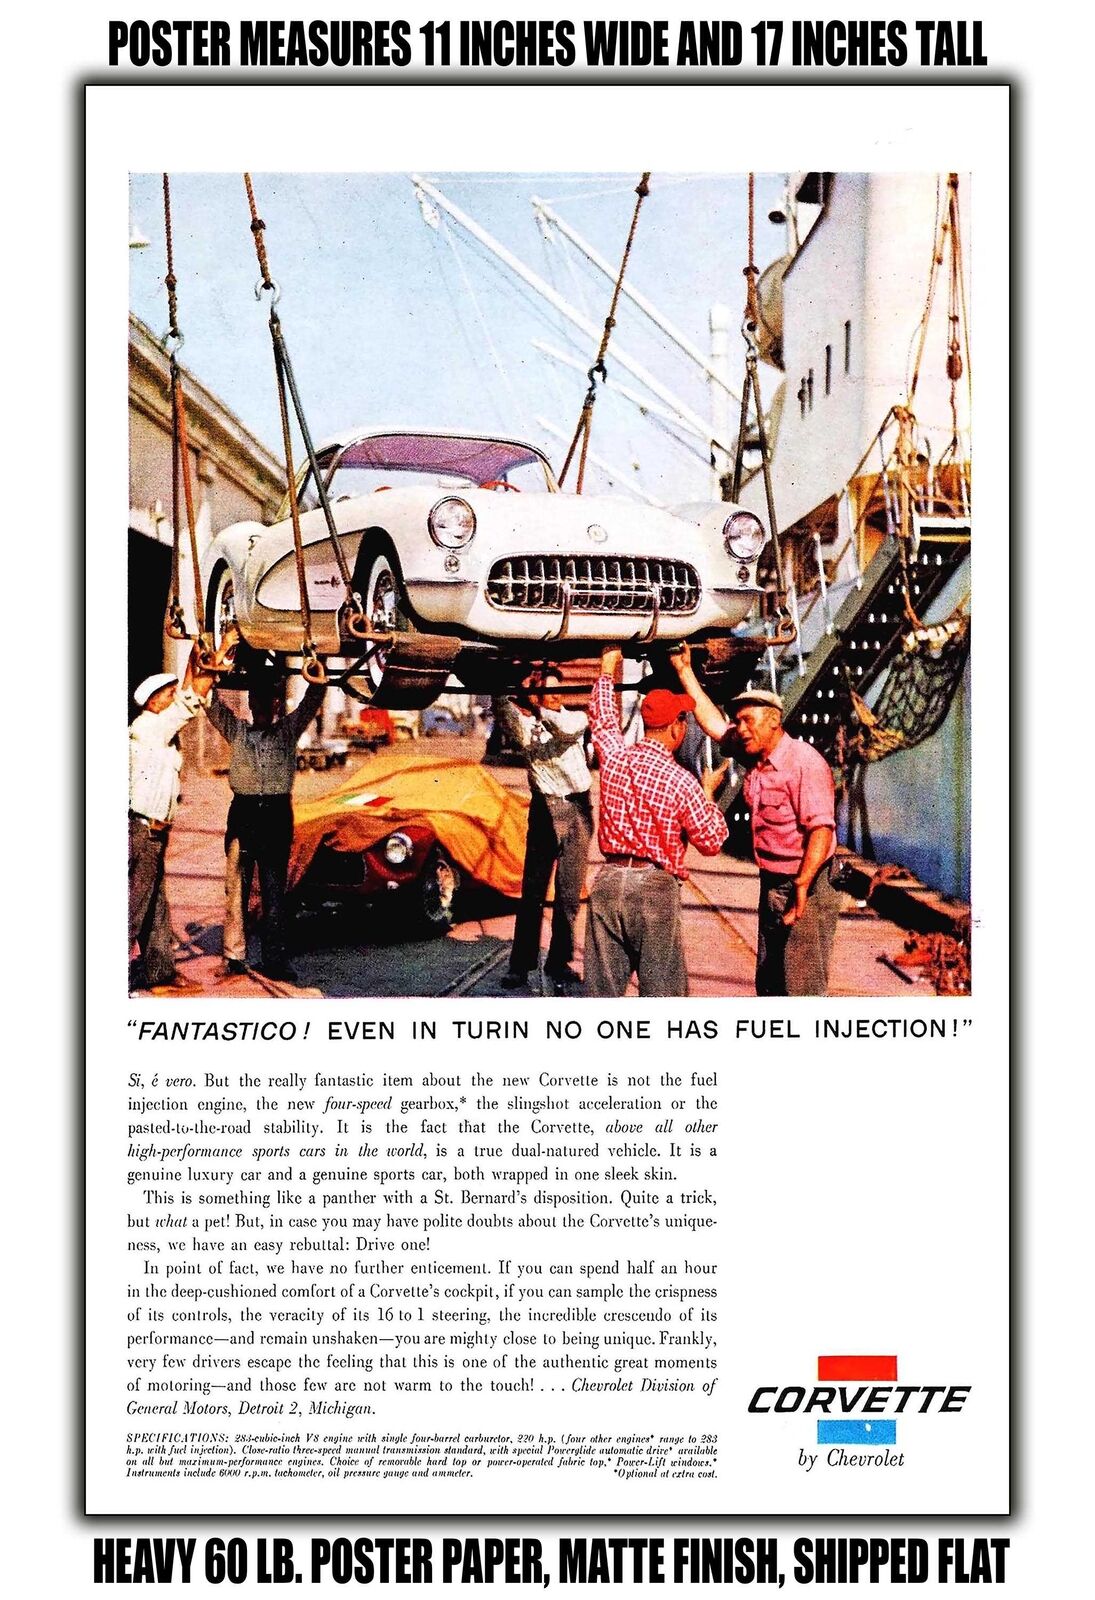 11x17 POSTER - 1957 Chevy Corvette